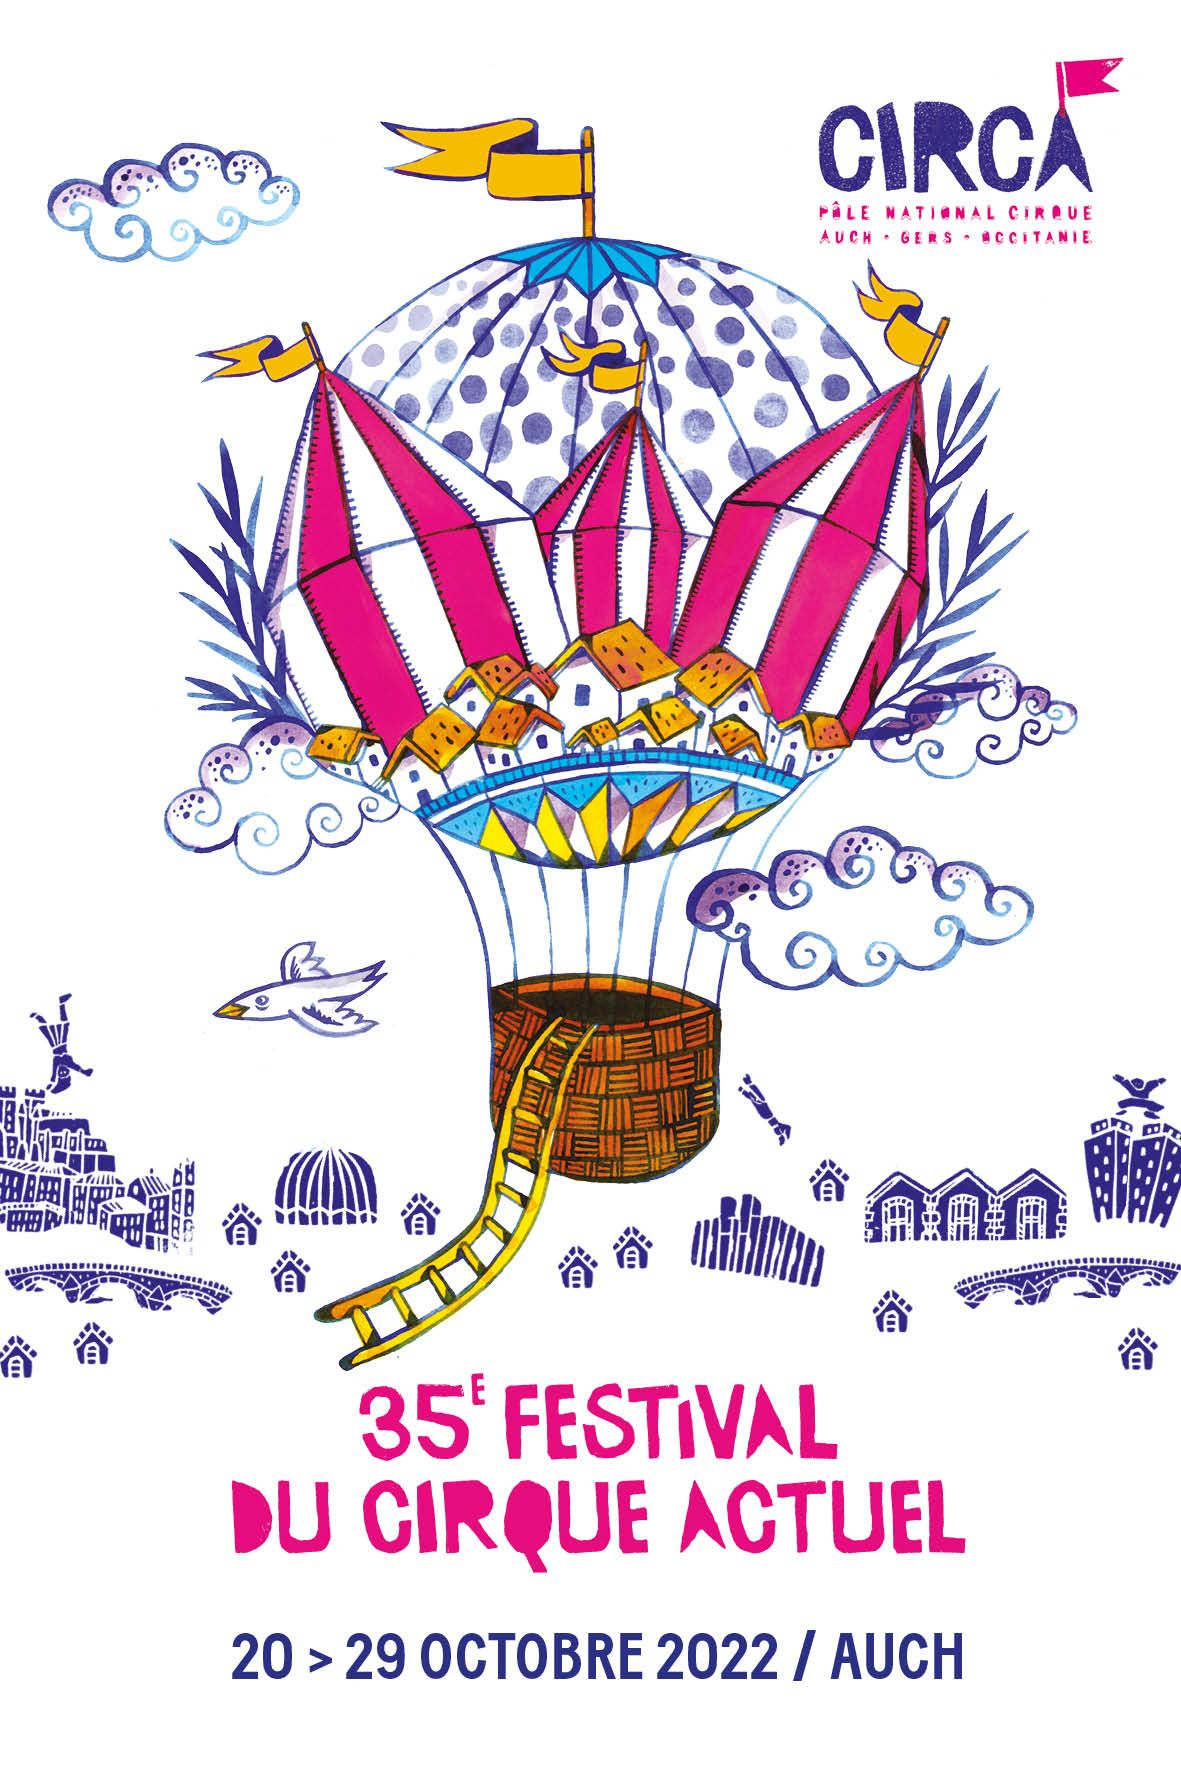 Circa - Festival du Cirque actuel à Auch - Edition 2022